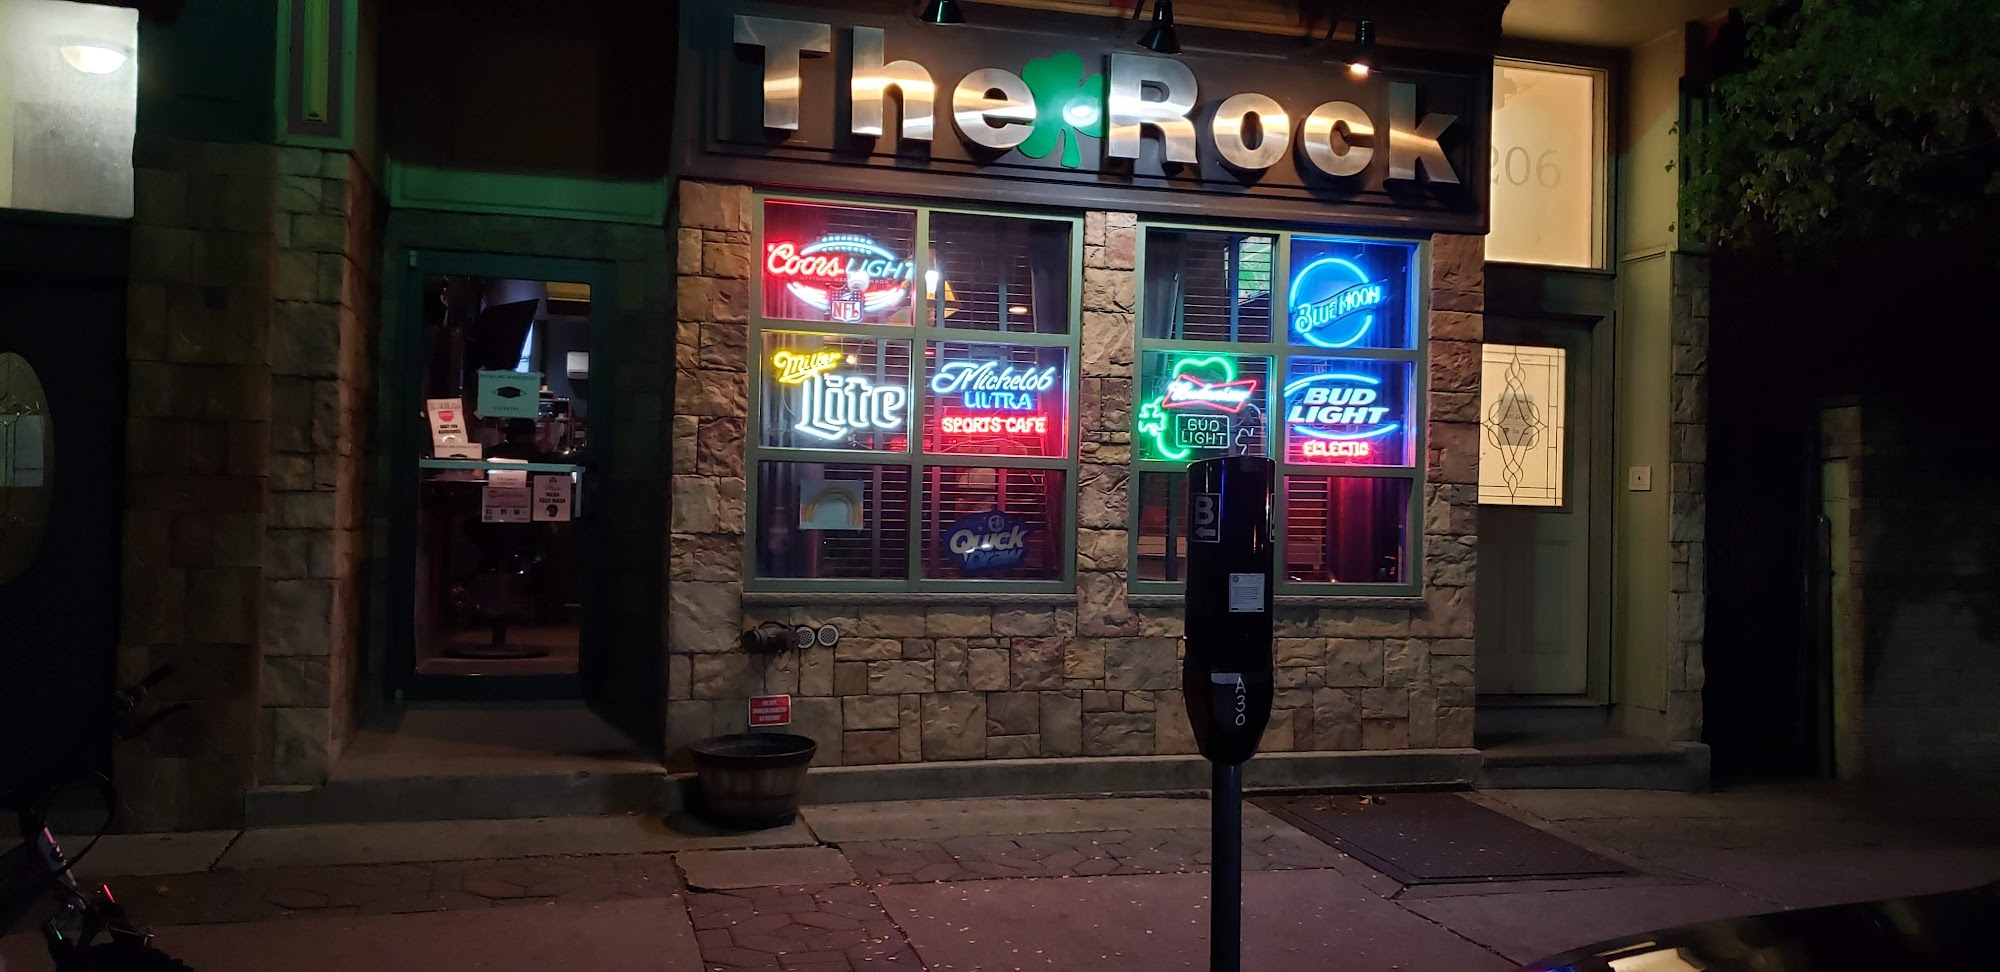 Rock Pub & Grill